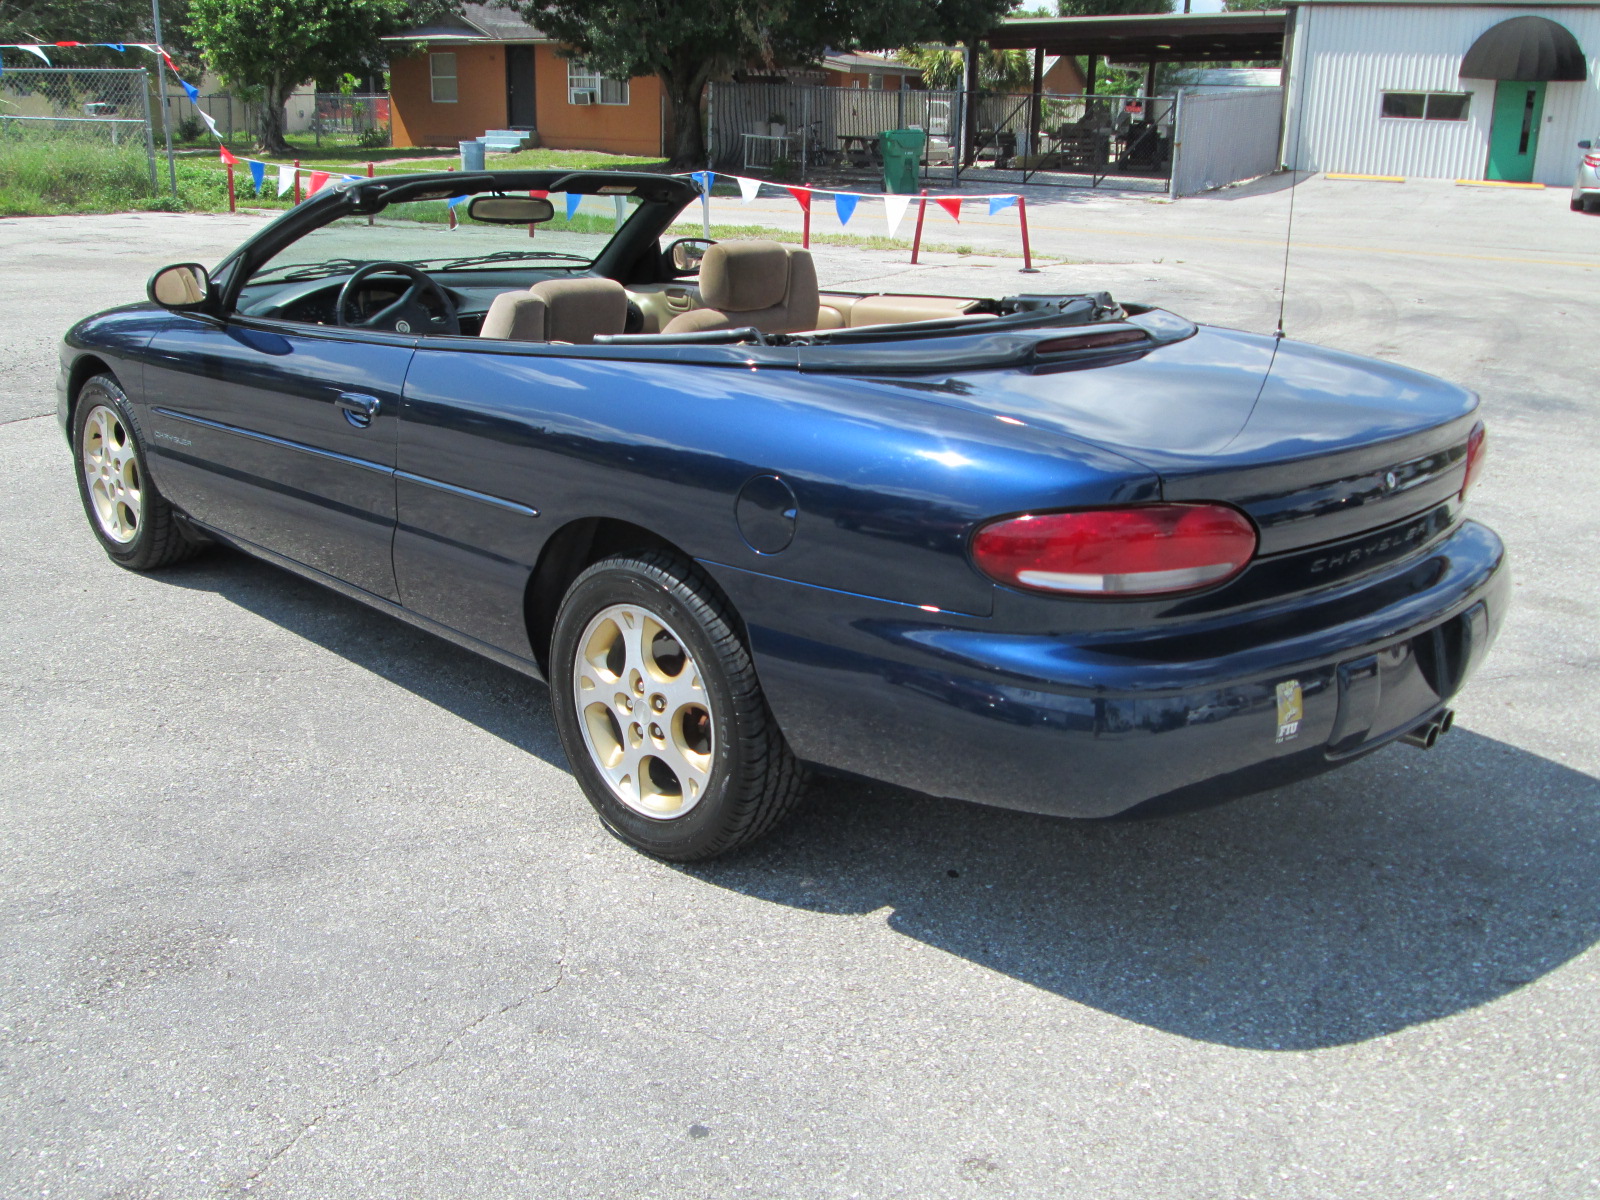 1999 Chrysler sebring convertible body kits #1